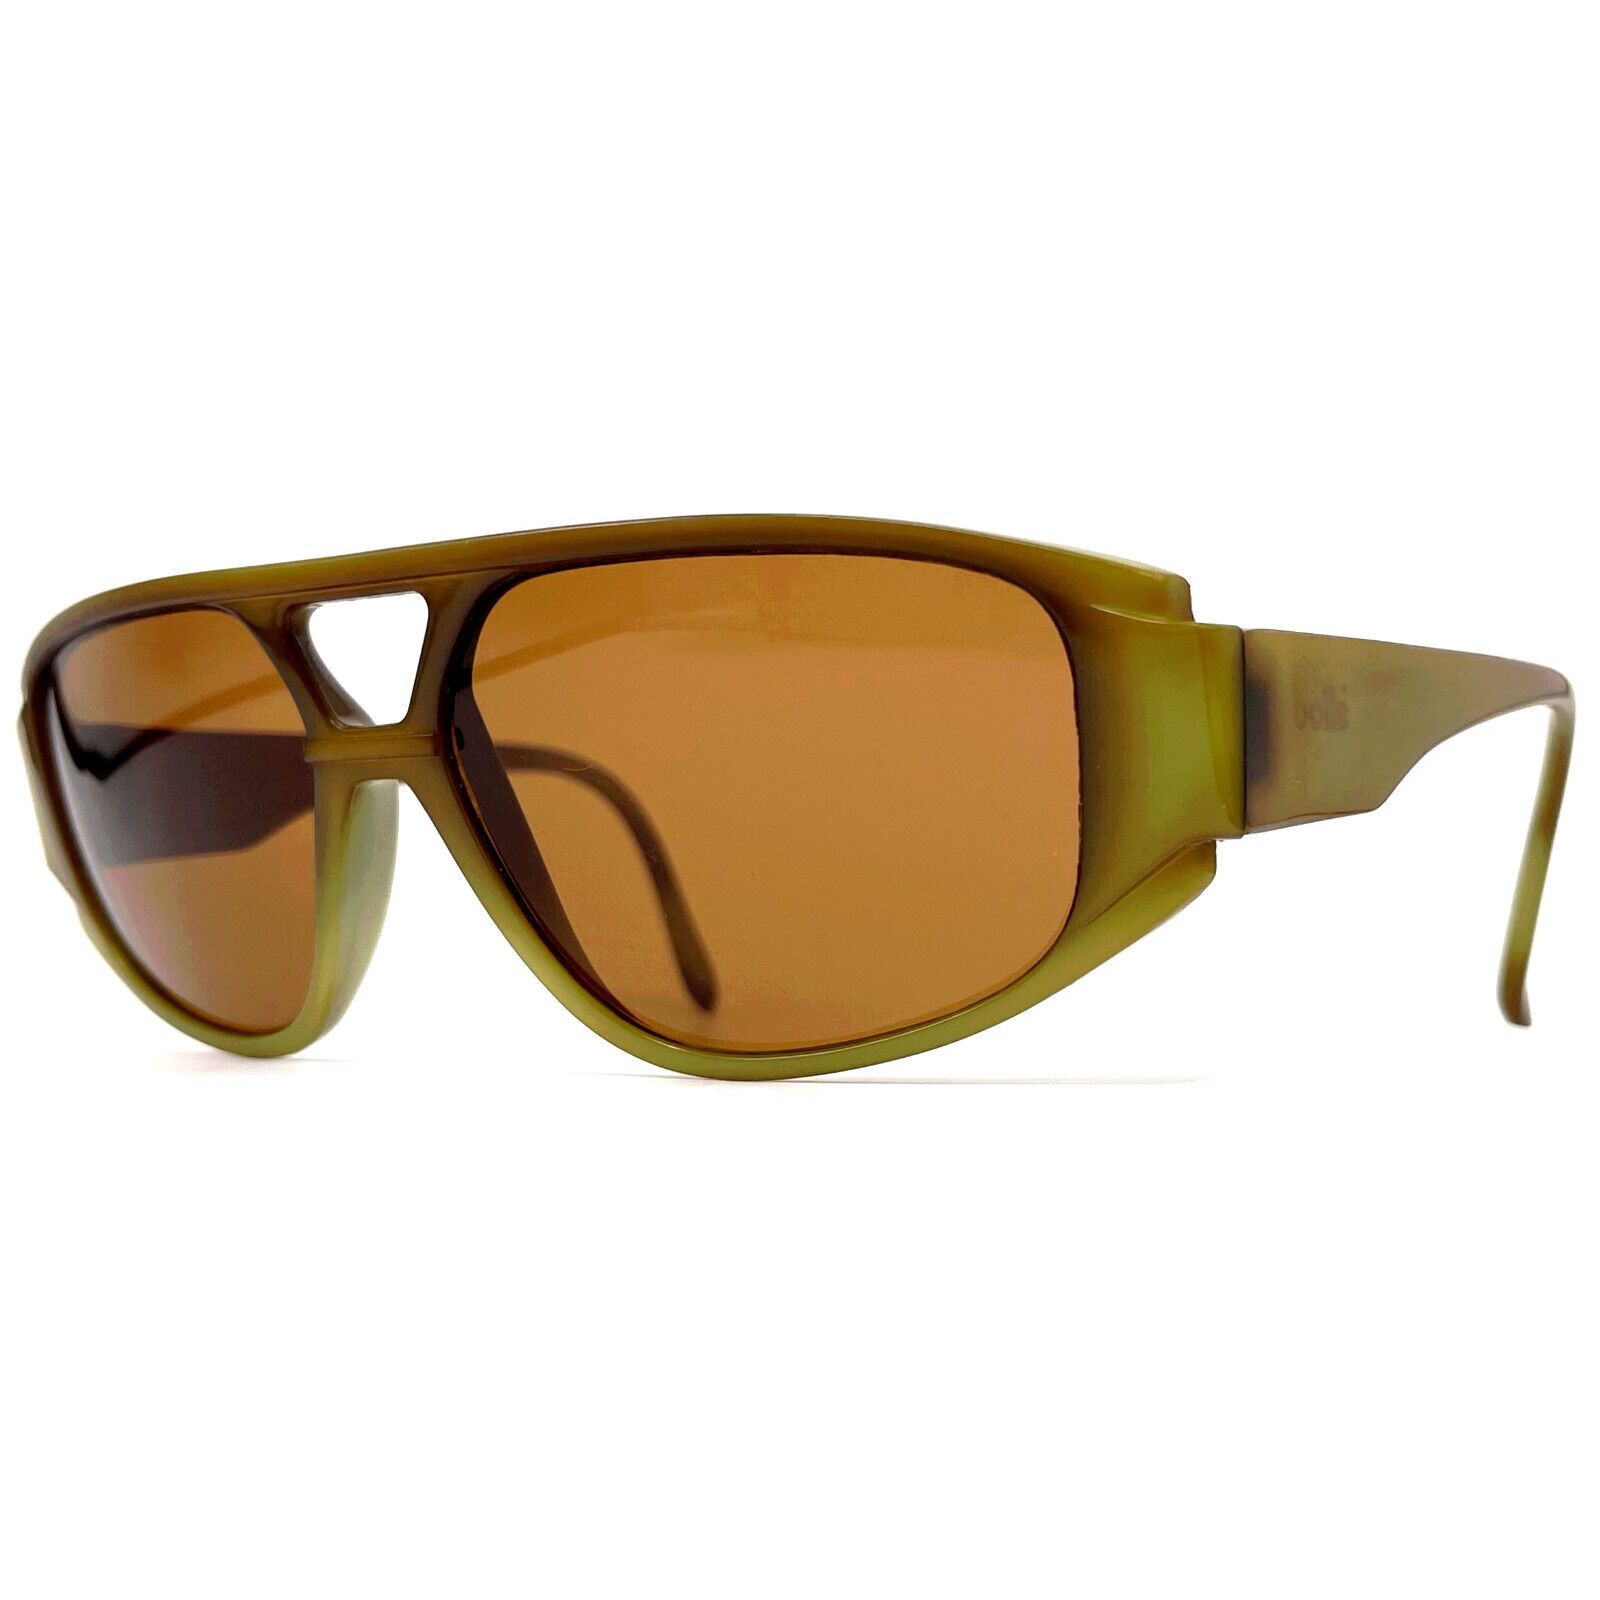 NOS vintage BOLLE 522 sunglasses - France 80\'s - Brown/Green - Large - ORIGINAL